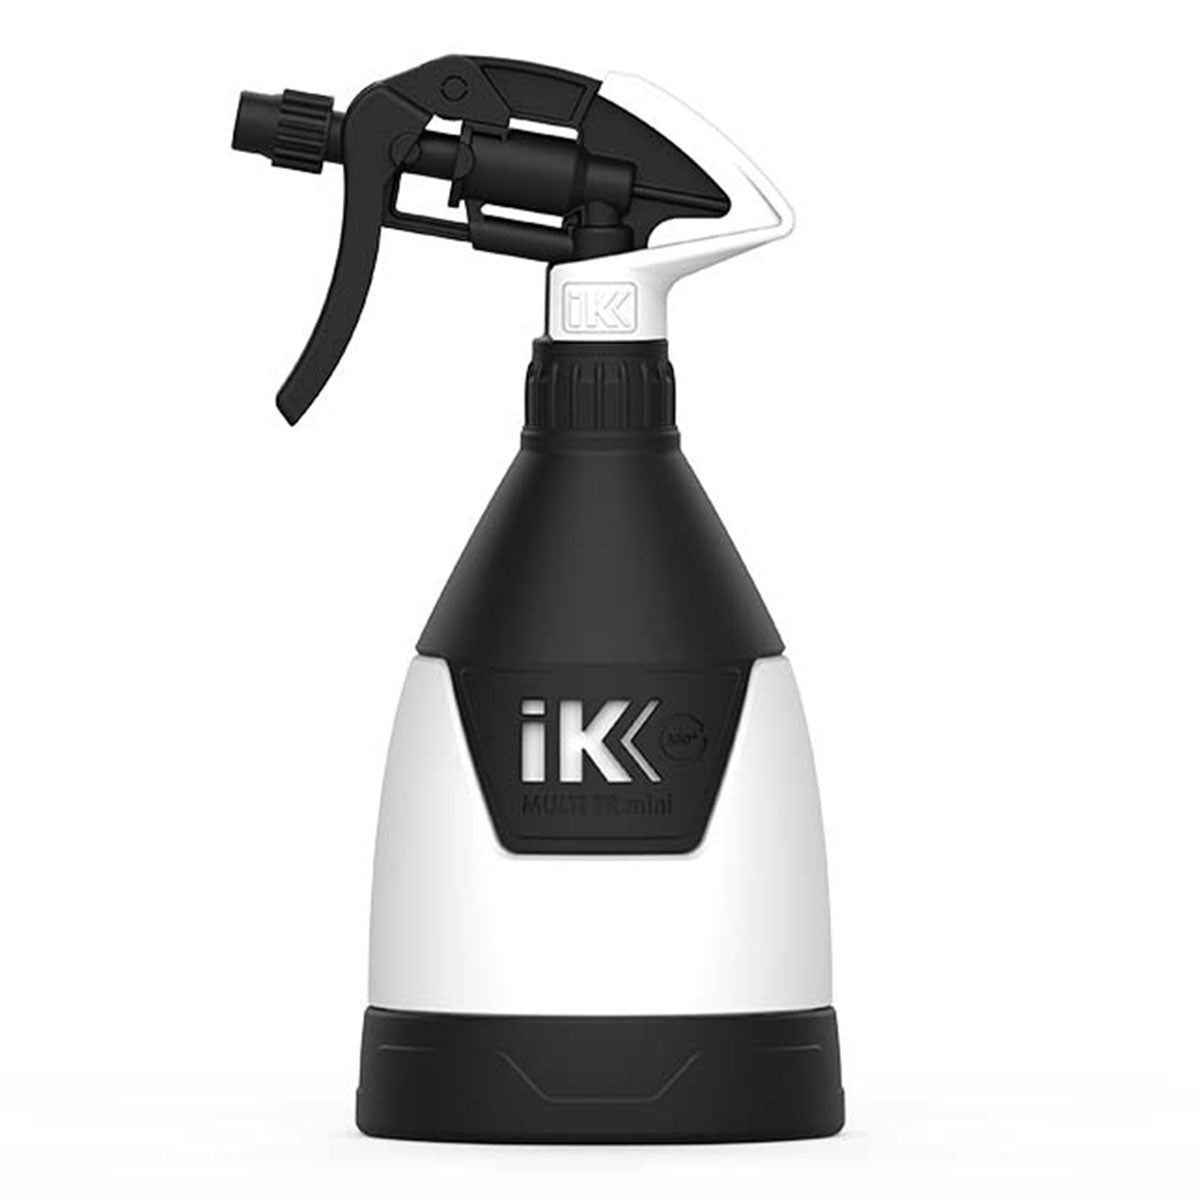 IK Sprayer Multi Trigger MINI 360 For Detailing and Car Wash